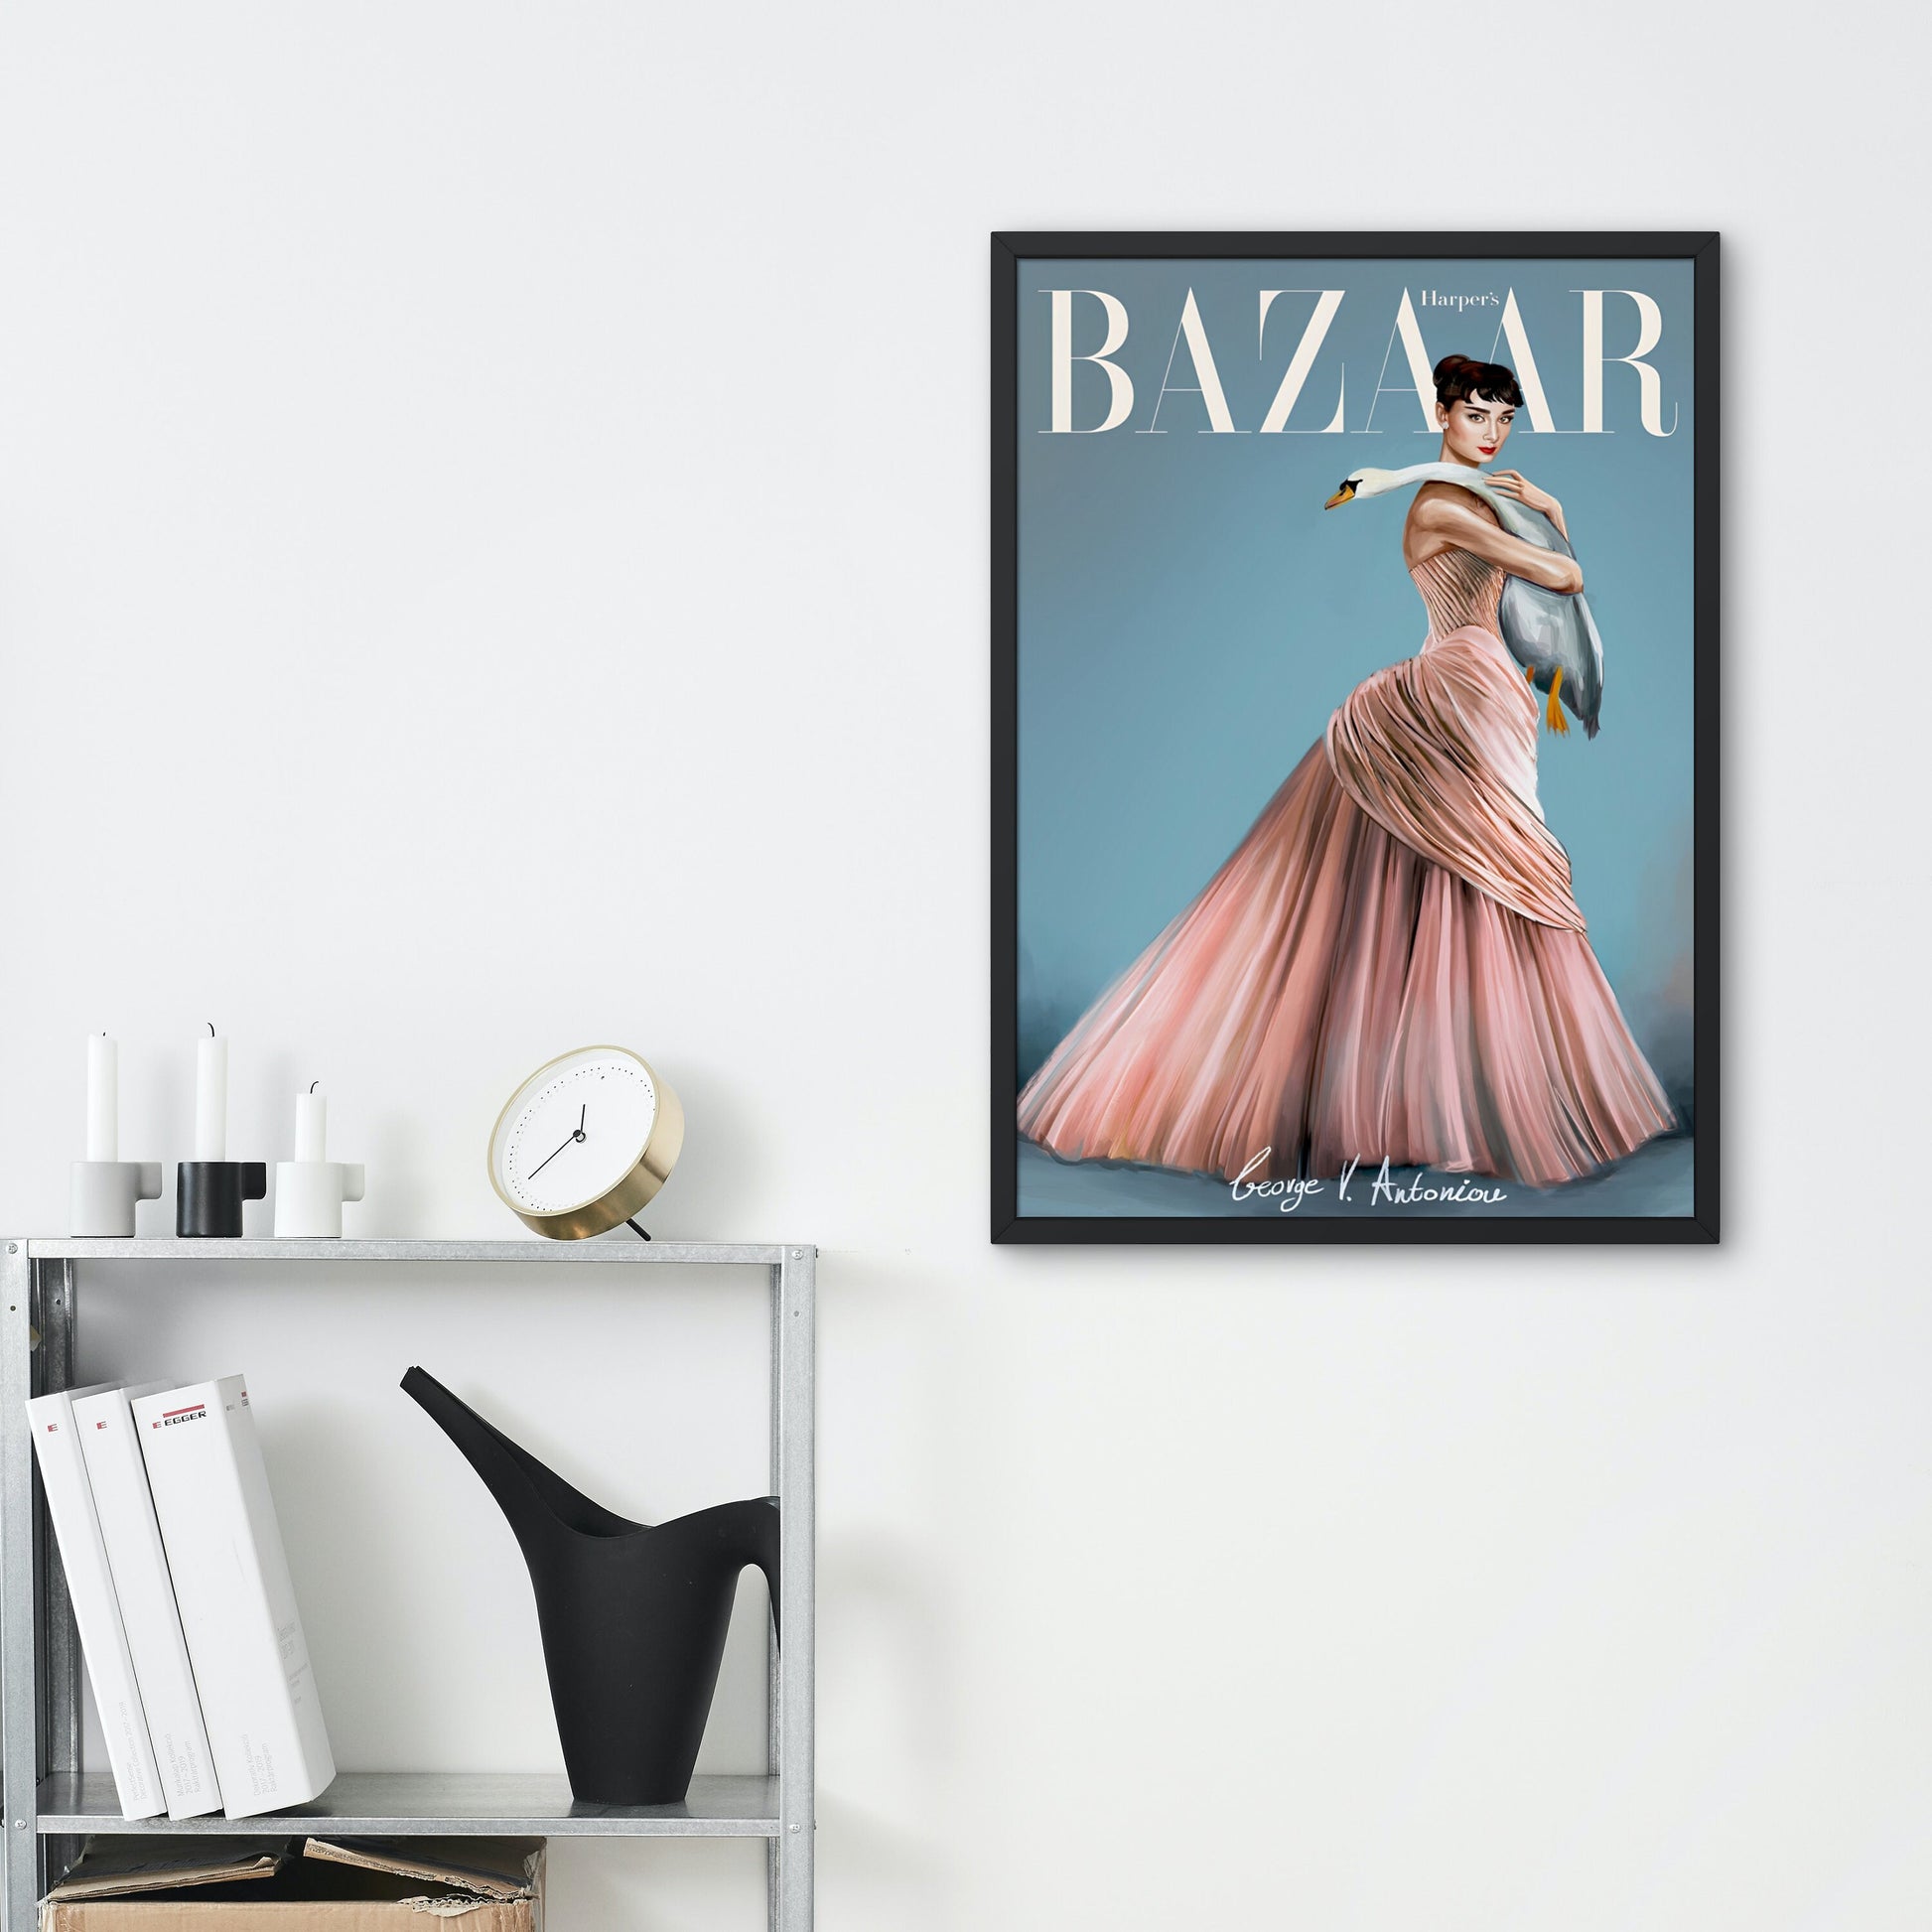 Vintage Bazaar Cover PRINTABLE, Audrey Hepburn Swam, Vintage Magazine Cover, Glamour Art, Fashion Wall Art, Retro Magazine Posters, Pastel